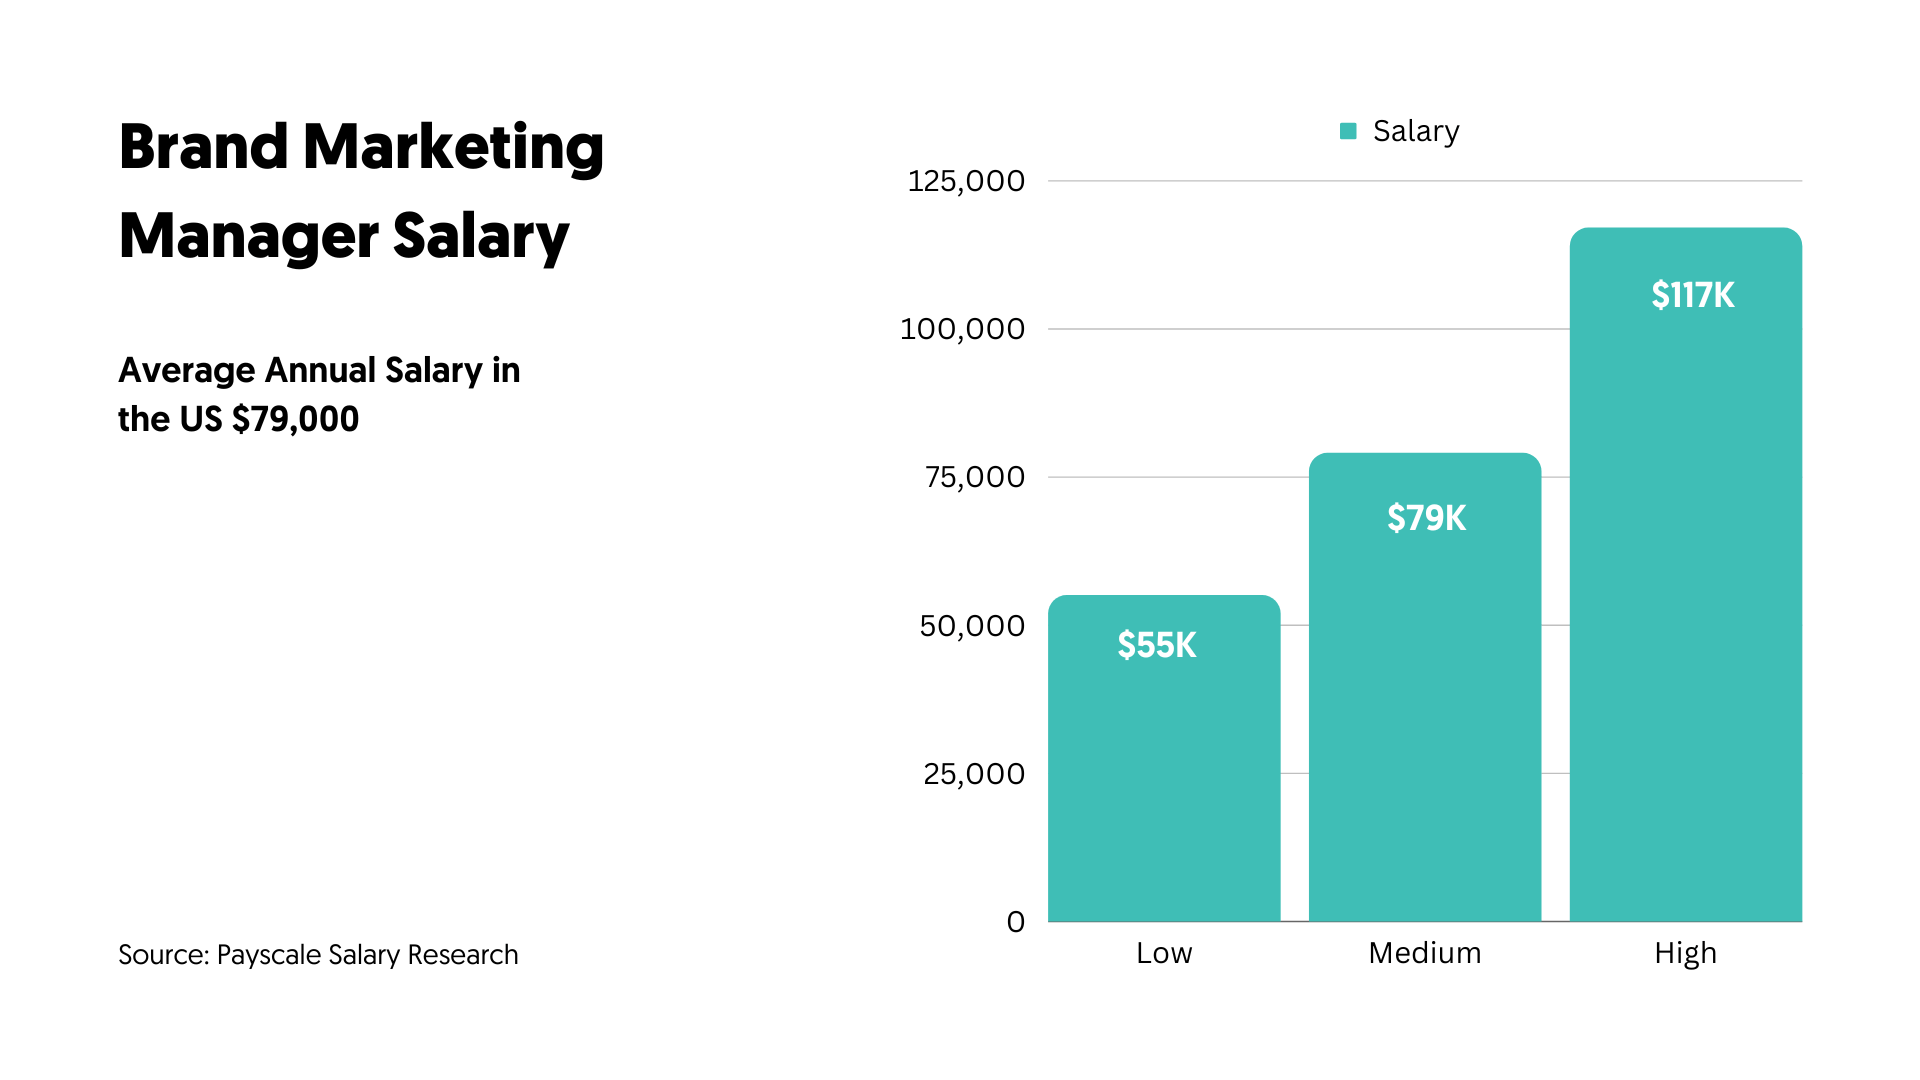 Brand Marketing Manager Salary